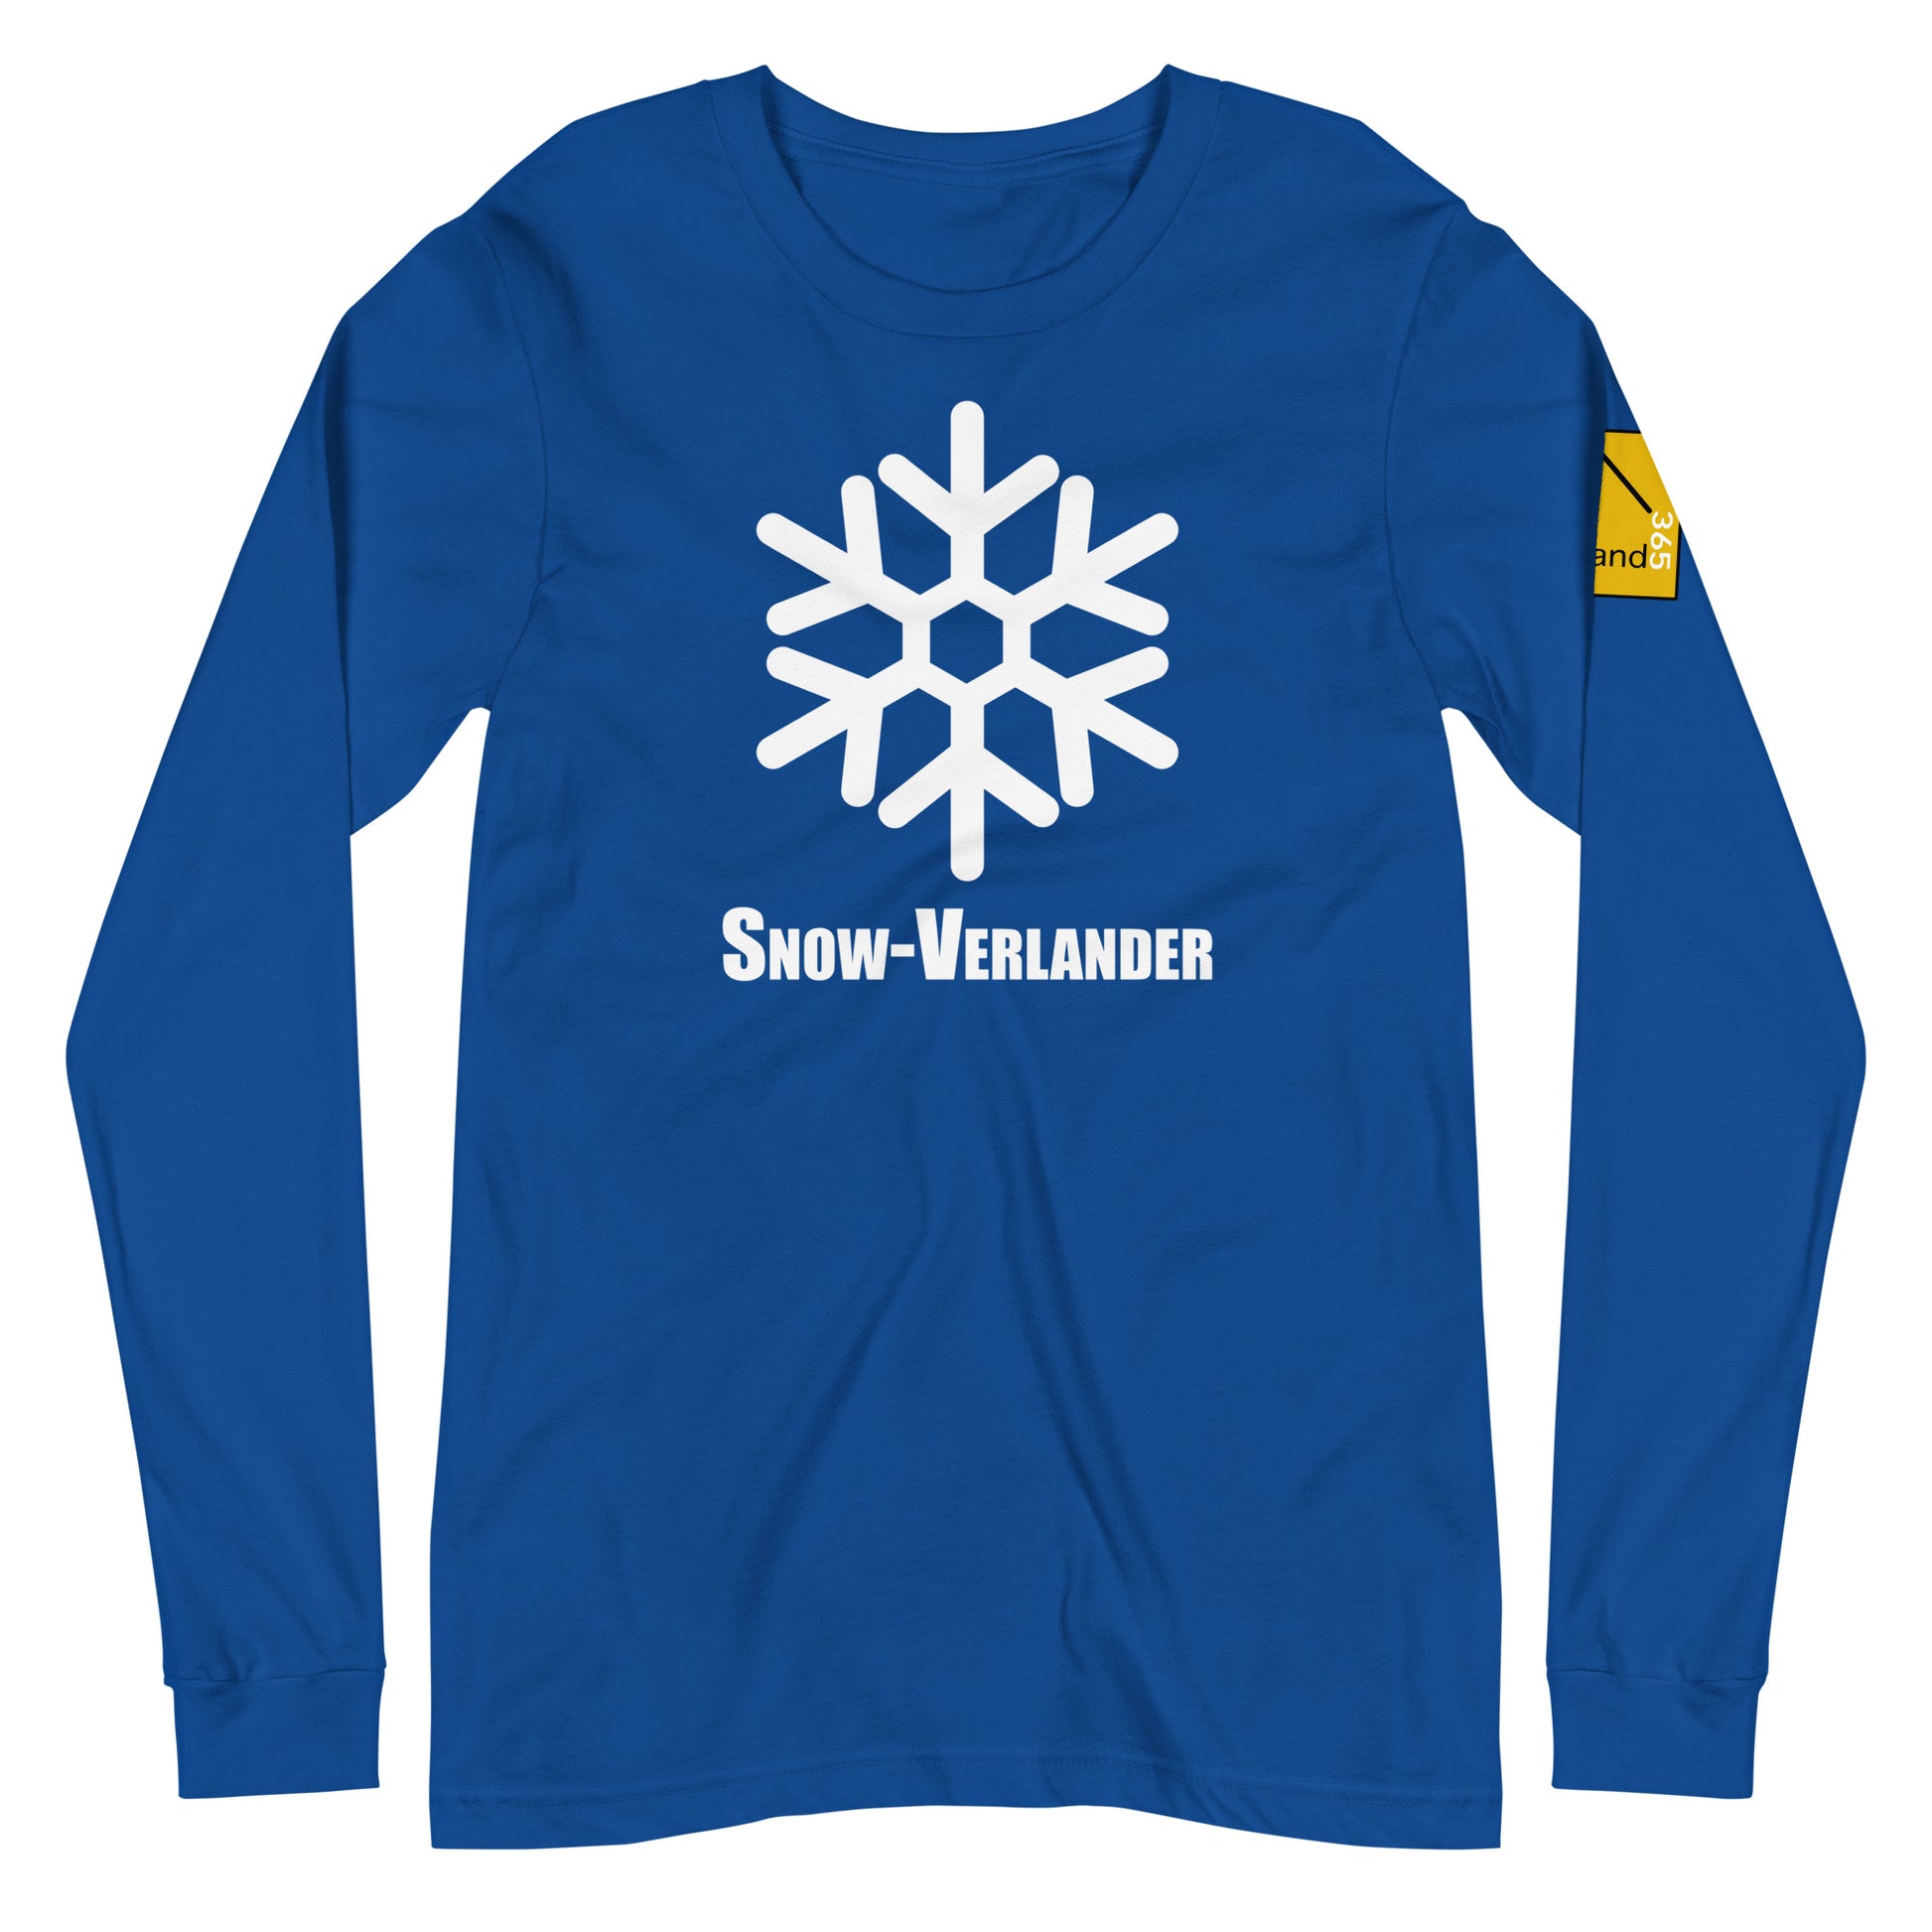 Snow-Verlander overland long-sleeve. Blue. overland365.com